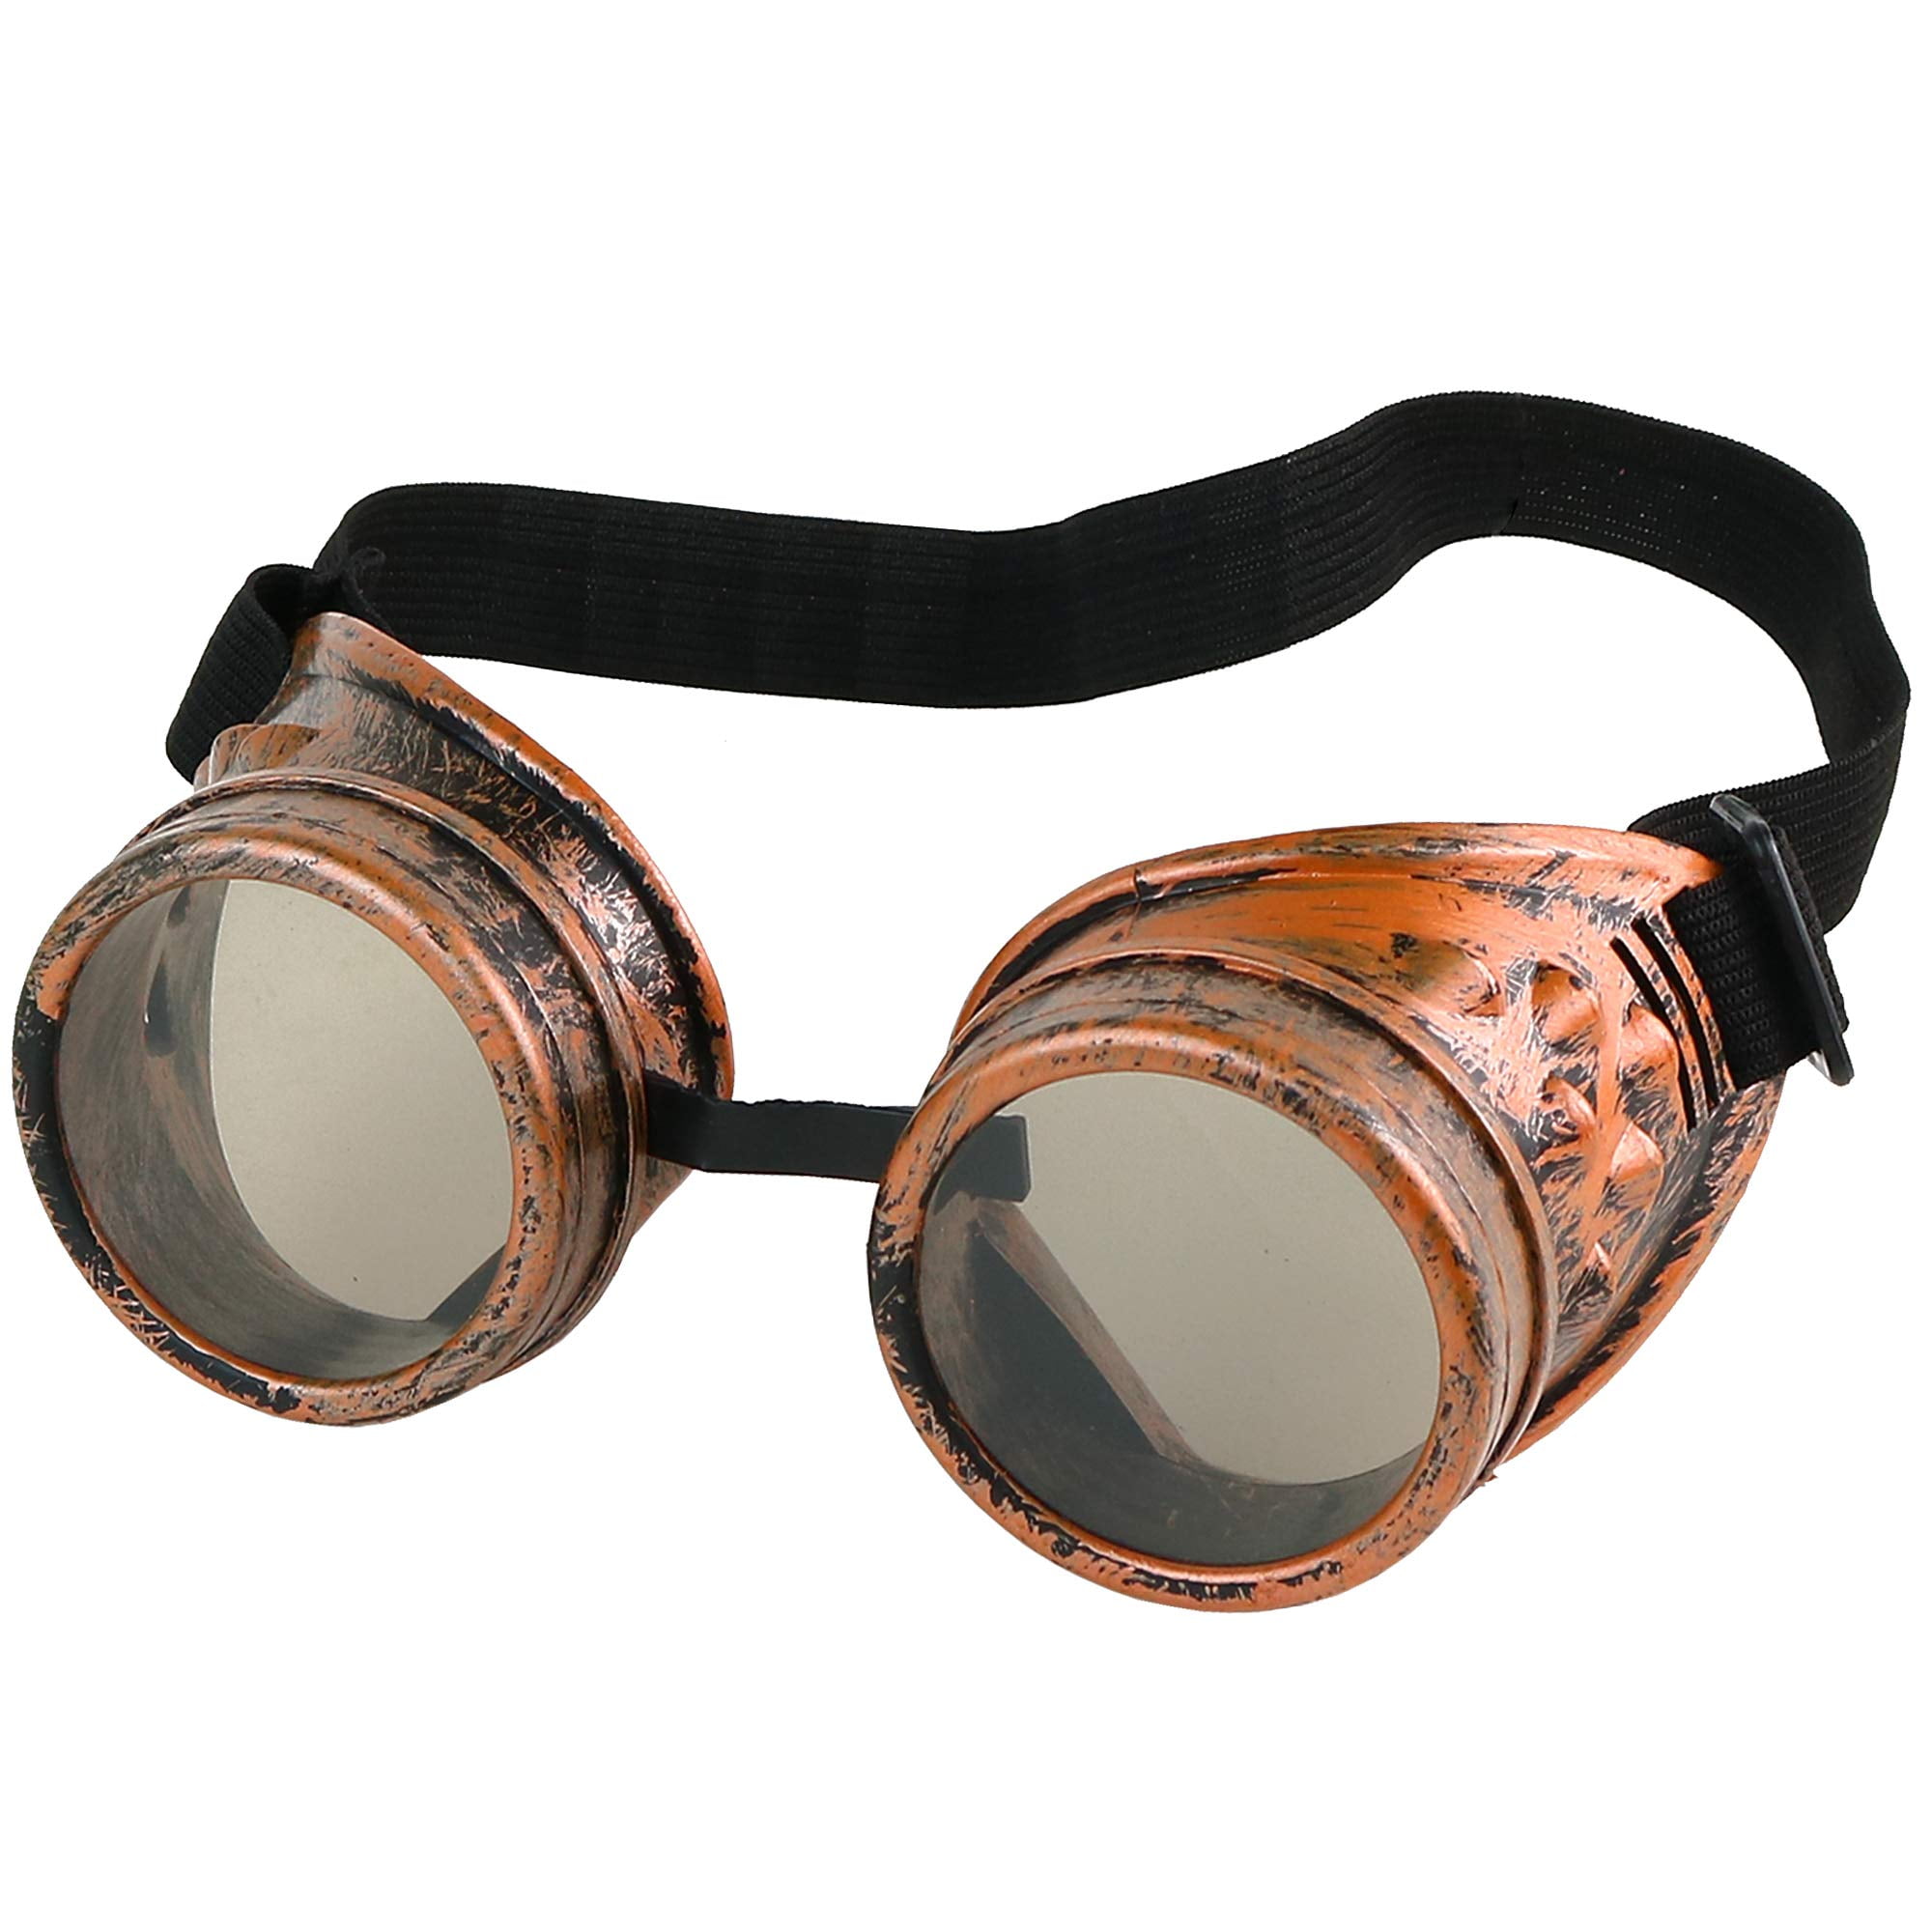 Details about   Retro Steam  Round Punk Goggles Steampunk Glasses Welding Gothic Hot 